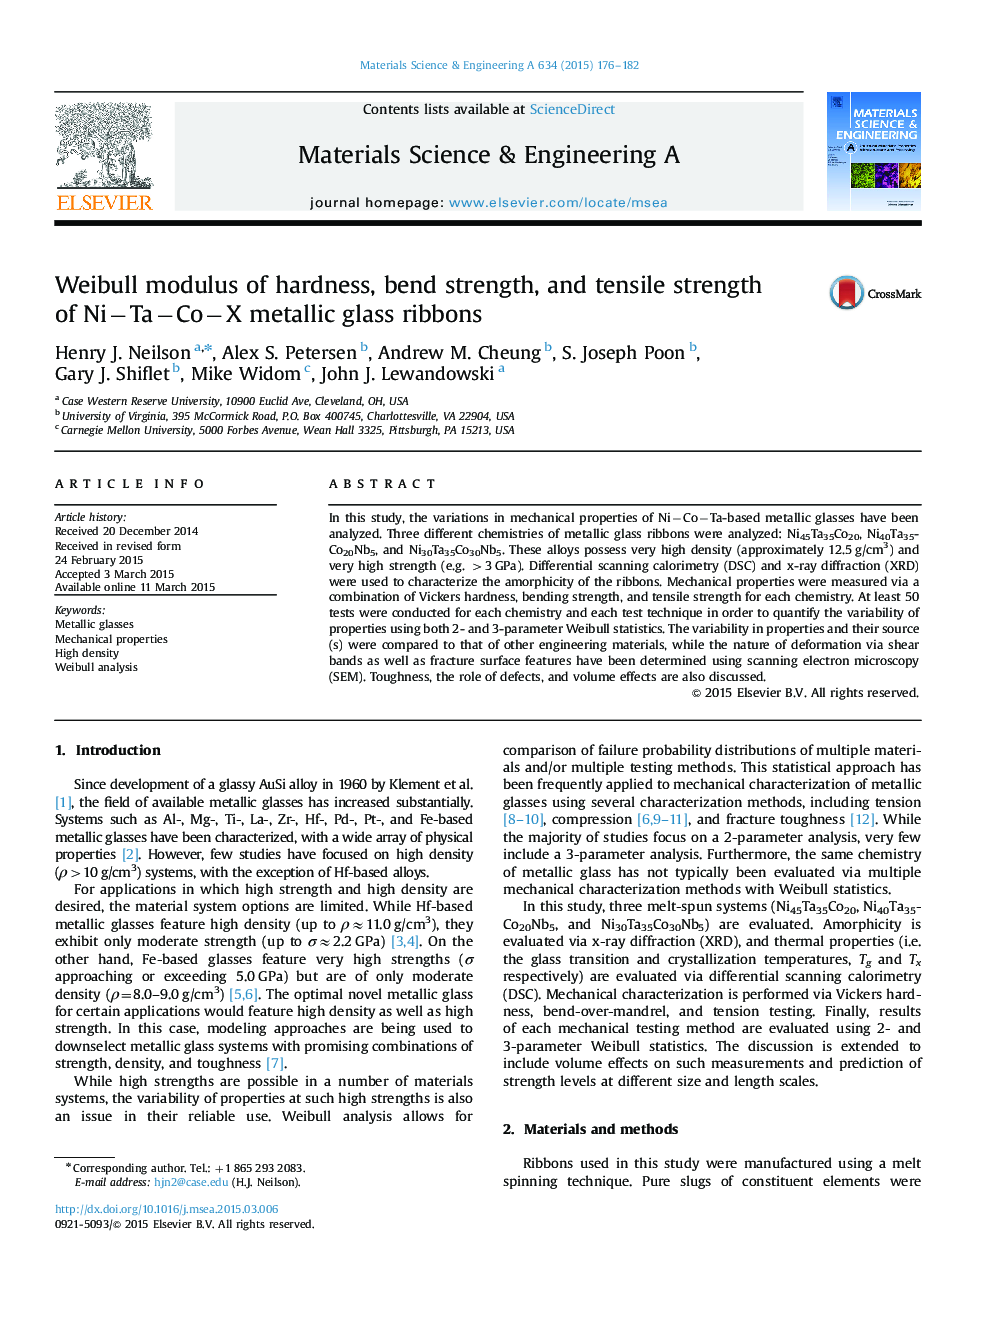 Weibull modulus of hardness, bend strength, and tensile strength of Ni−Ta−Co−X metallic glass ribbons